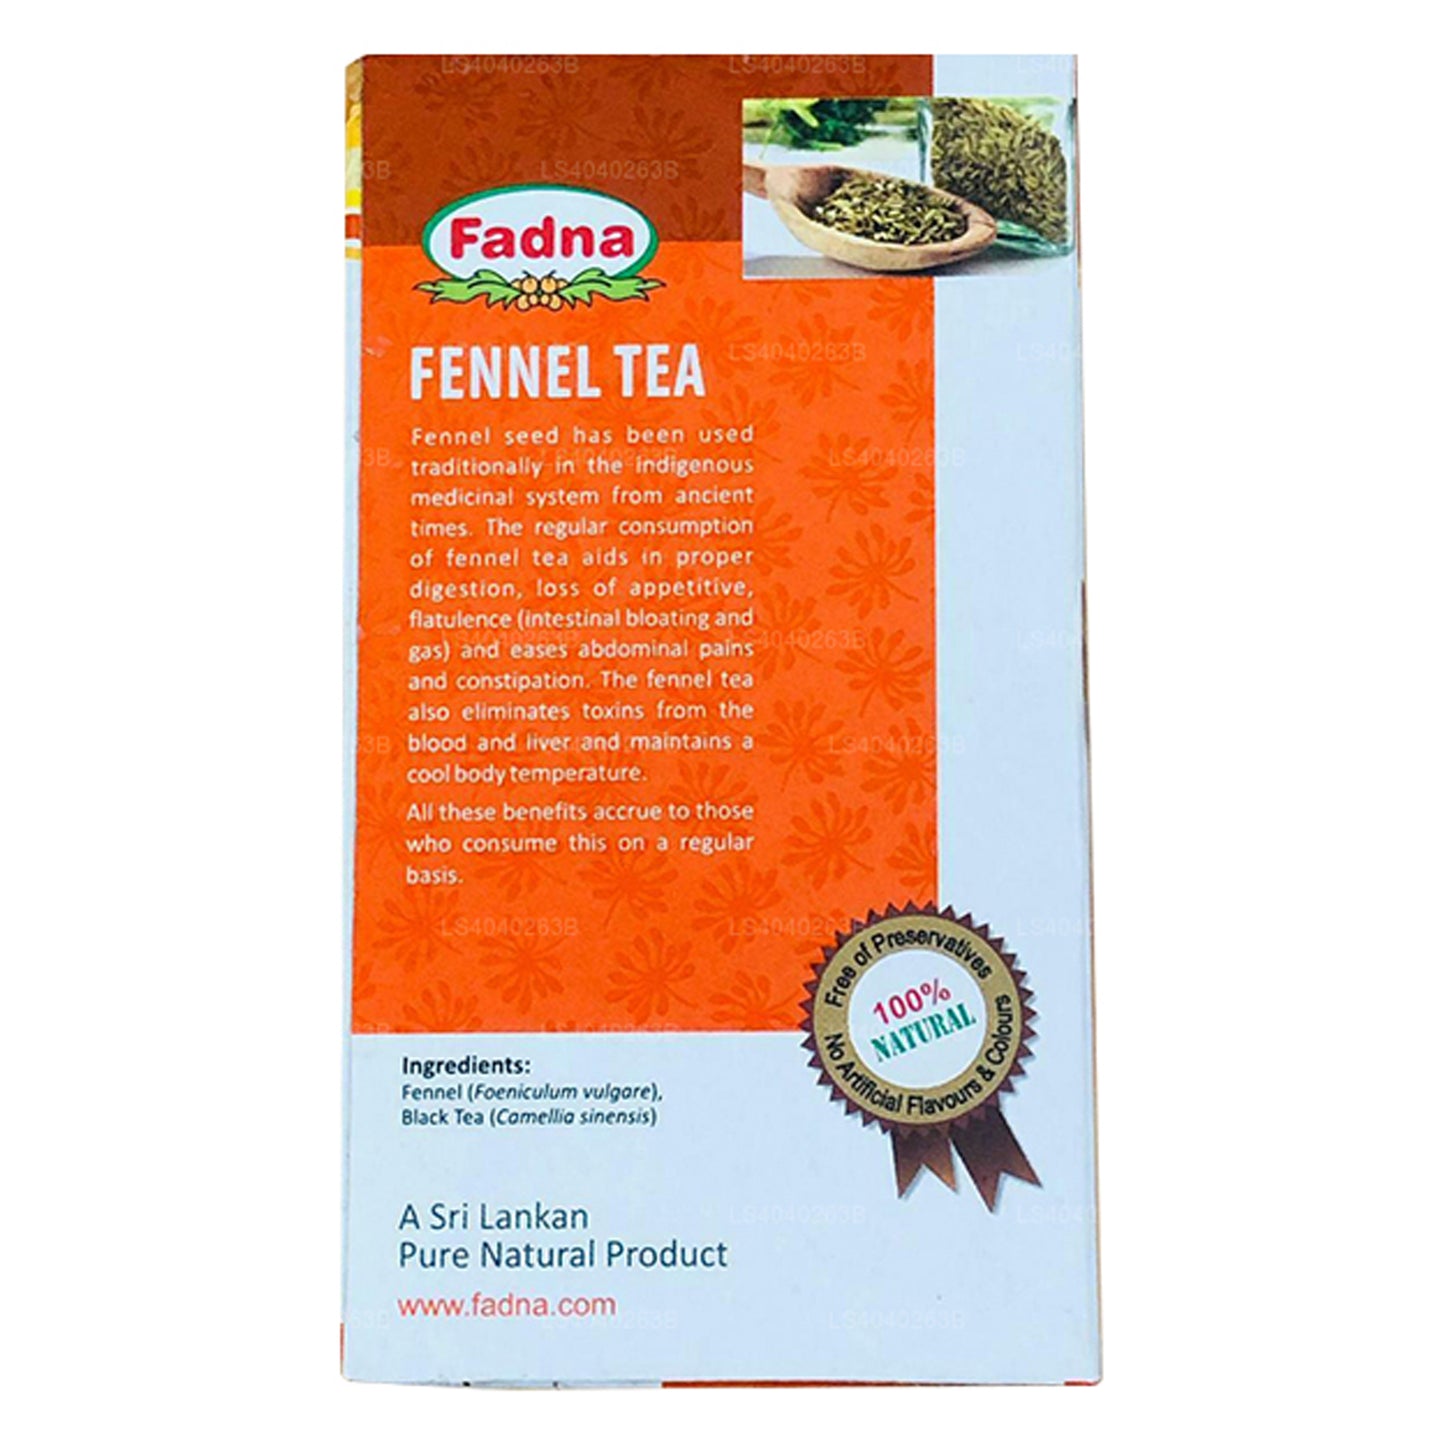 Fadna Fennel Tea (40g) 20 Tea Bags